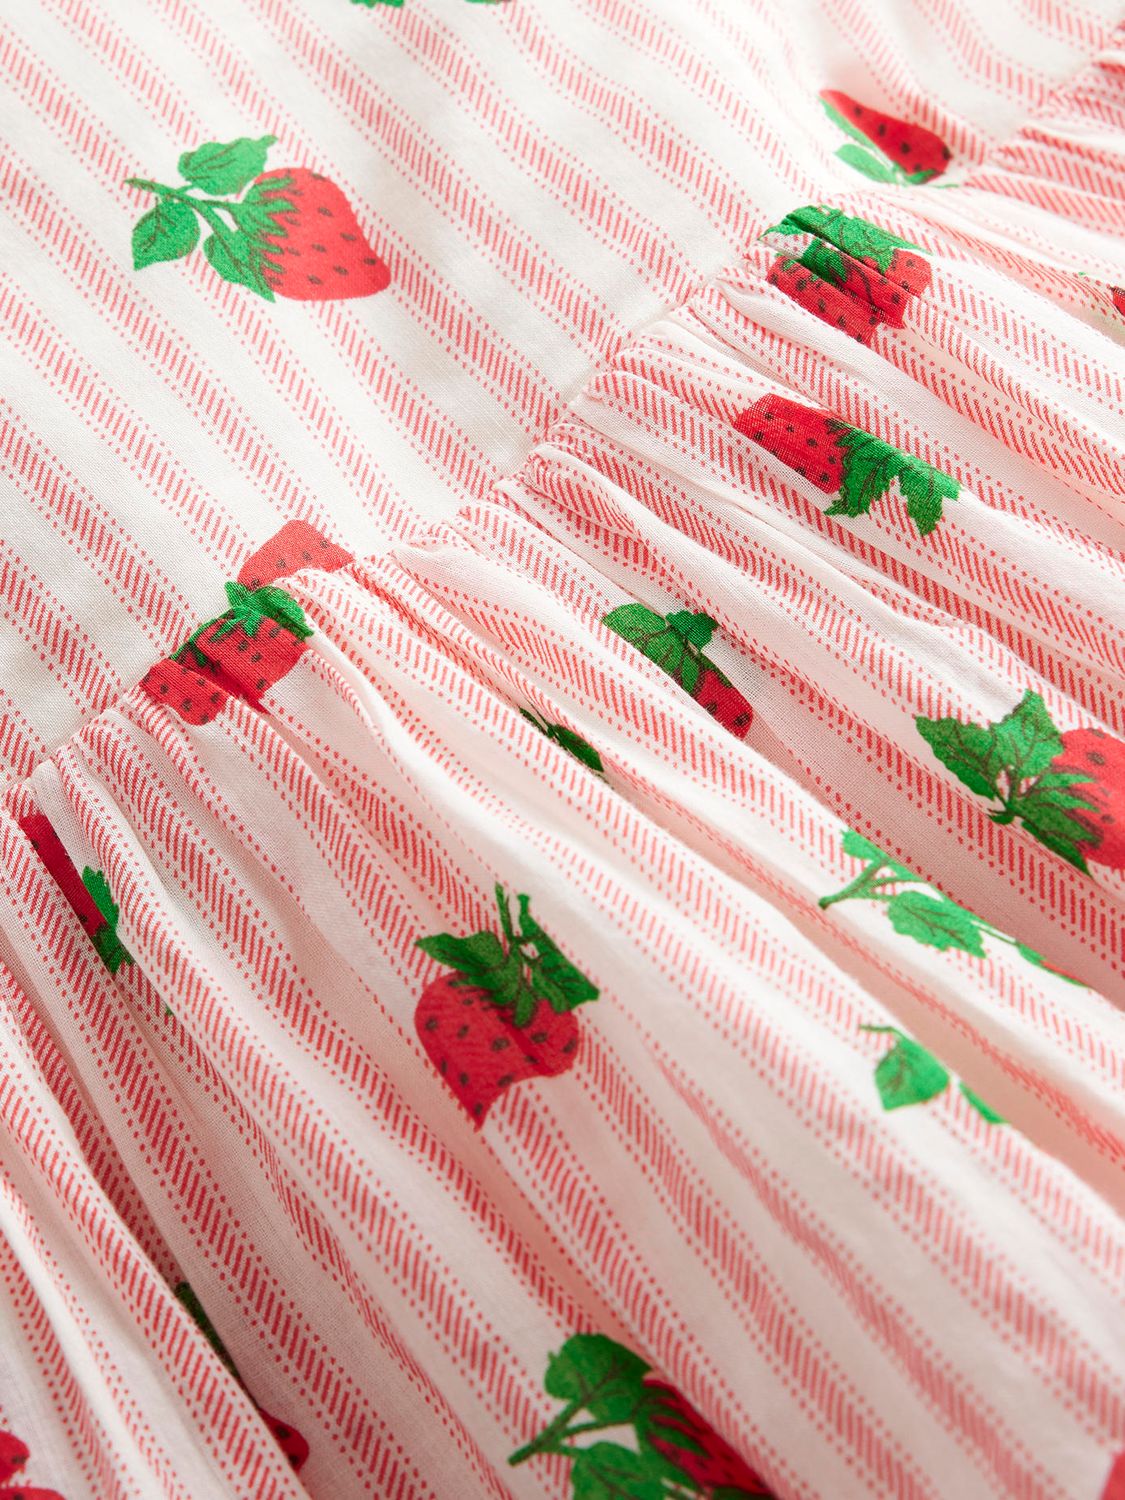 Buy Mini Boden Kids' Cross Back Dress, Strawberry Stripe Online at johnlewis.com